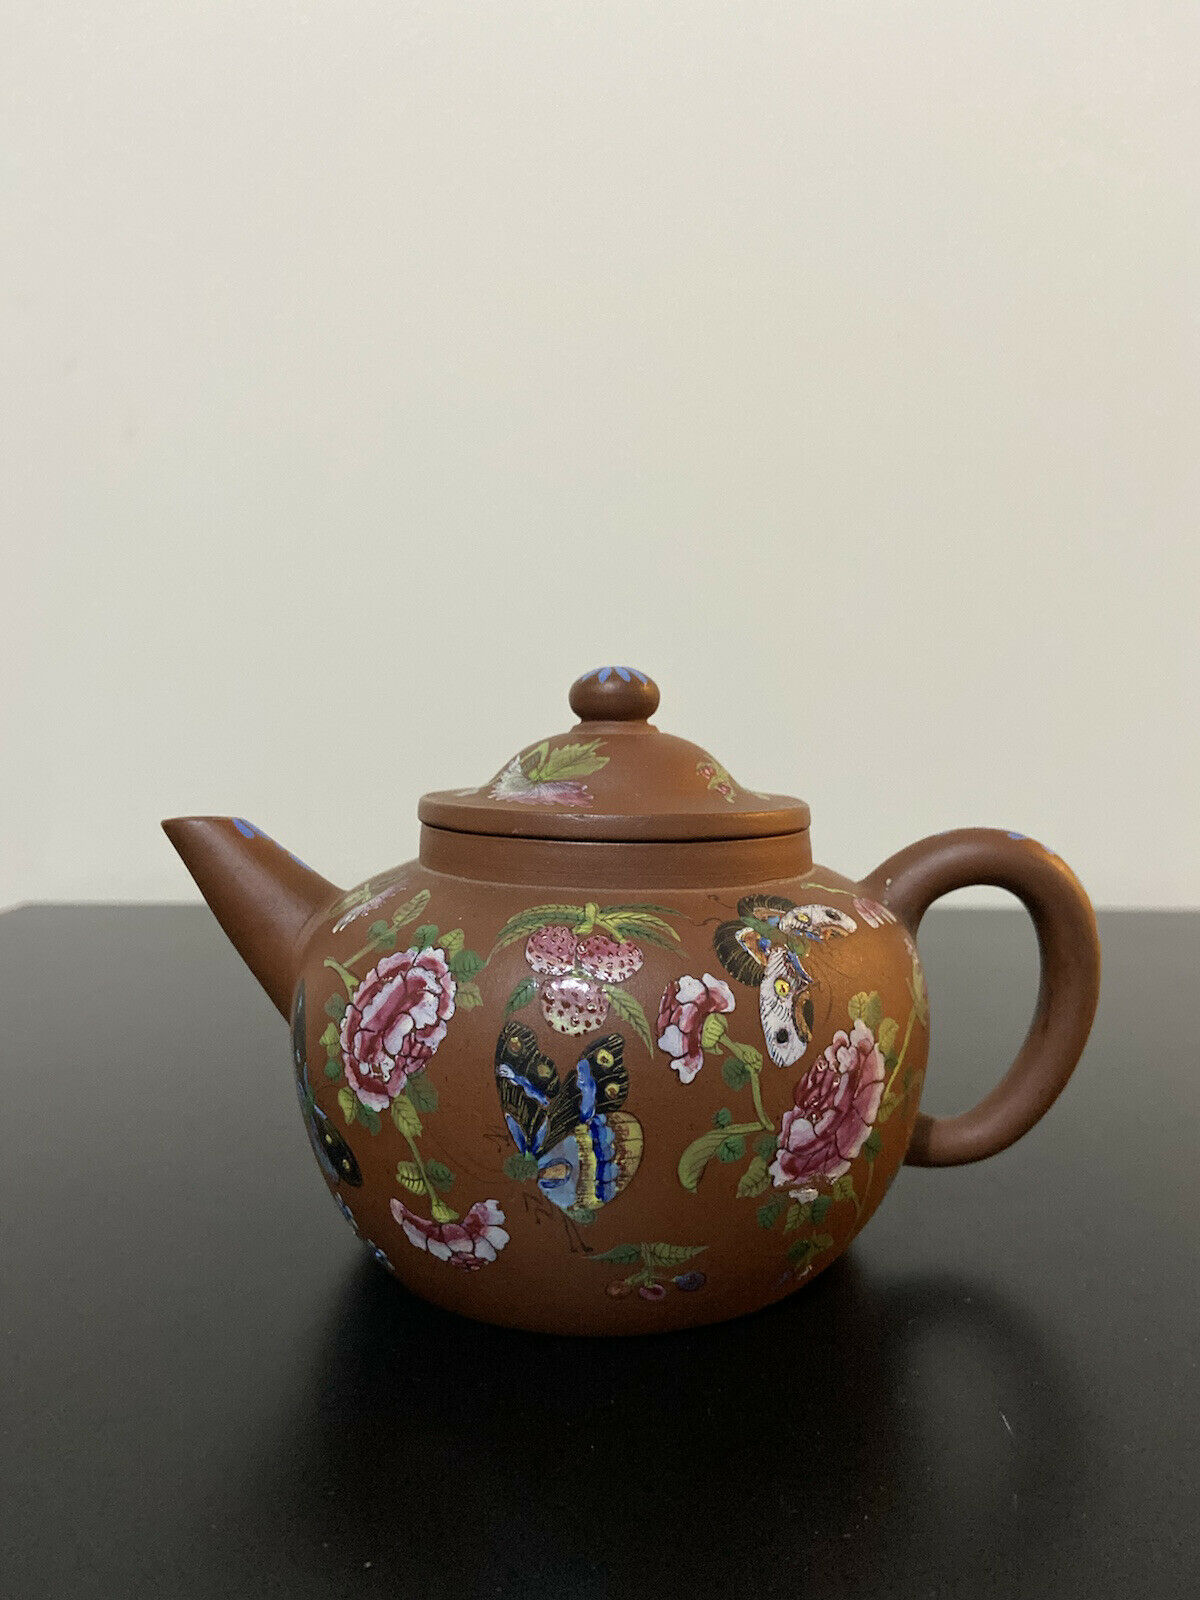 ebay.teapot.jpg